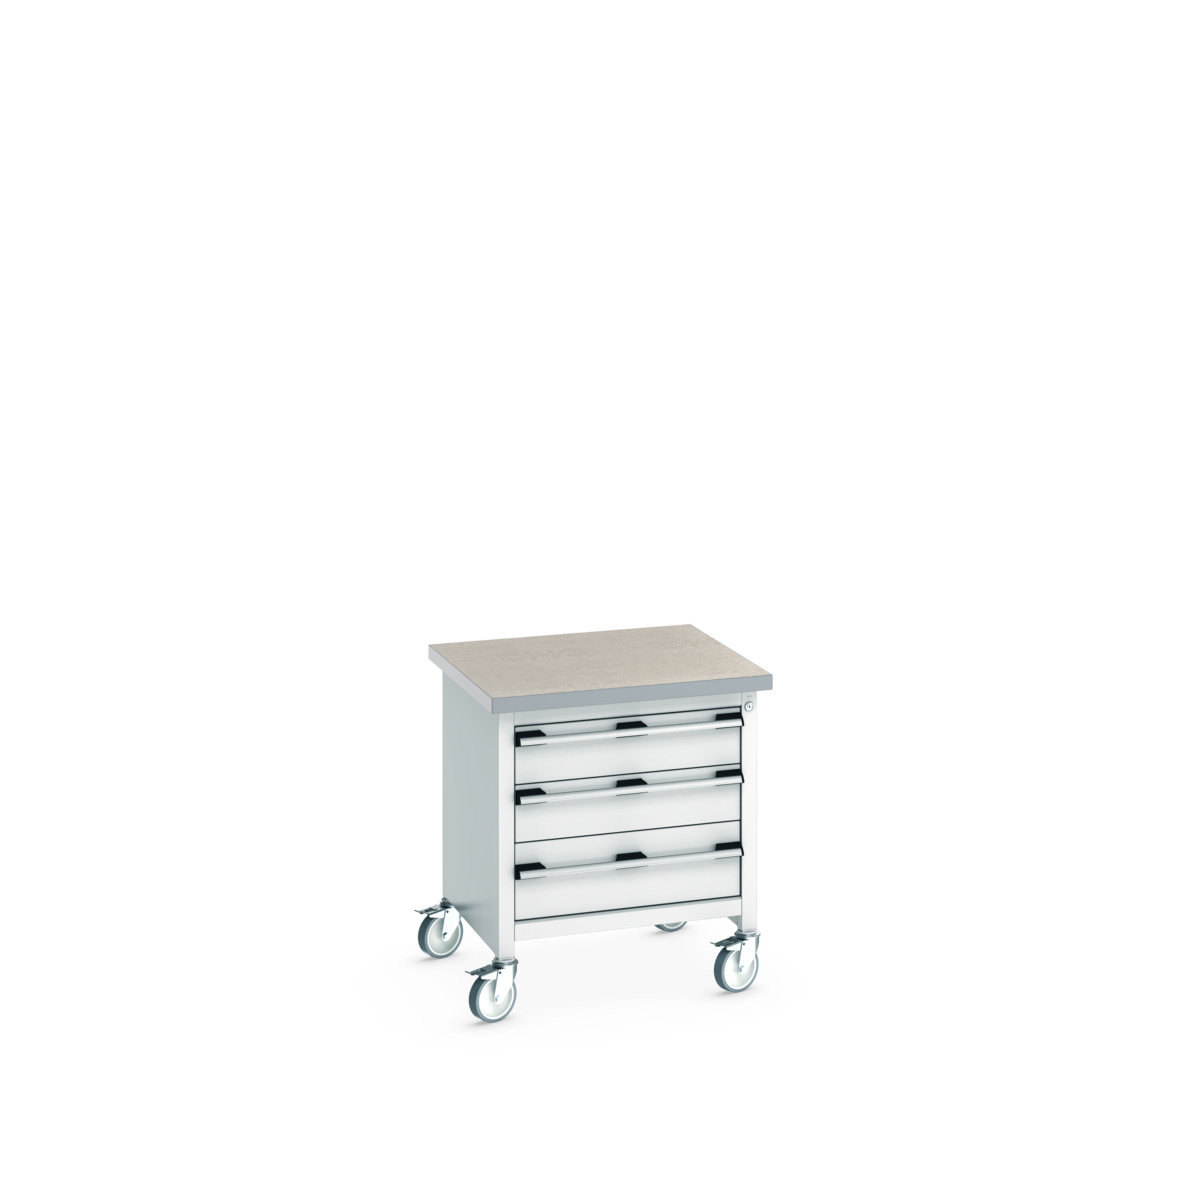 41002093.16V - cubio mobile storage bench (lino)